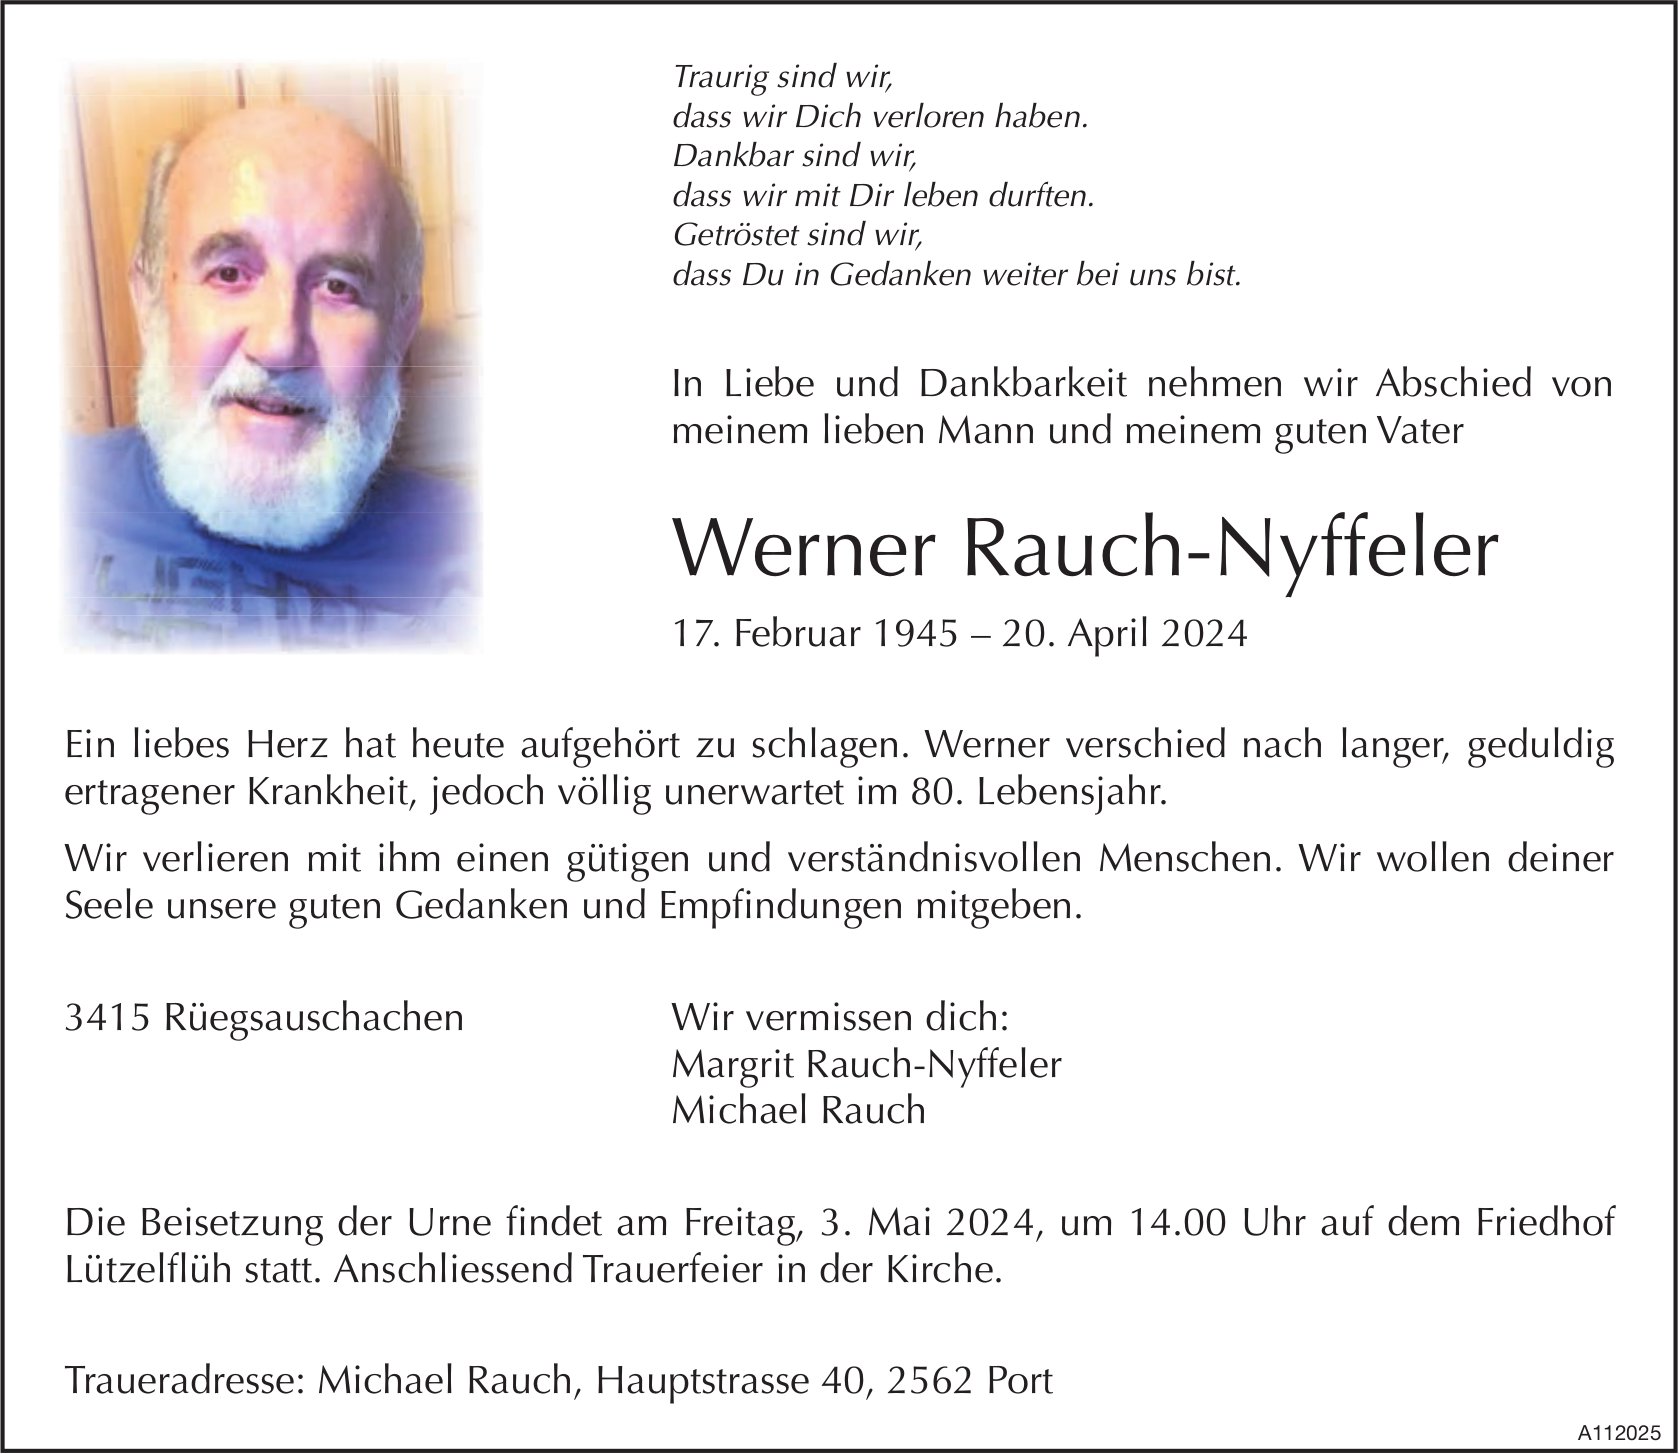 Werner Rauch-Nyffeler, April 2024 / TA